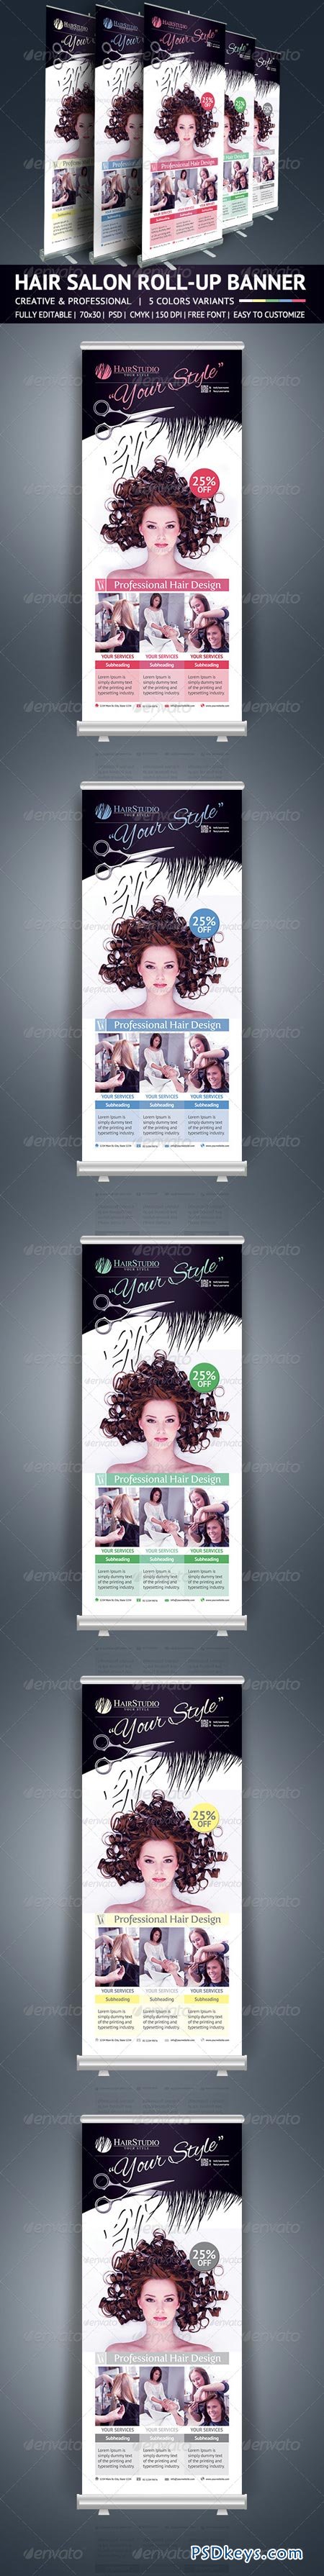 Hair Salon Roll Up Banner 5765657